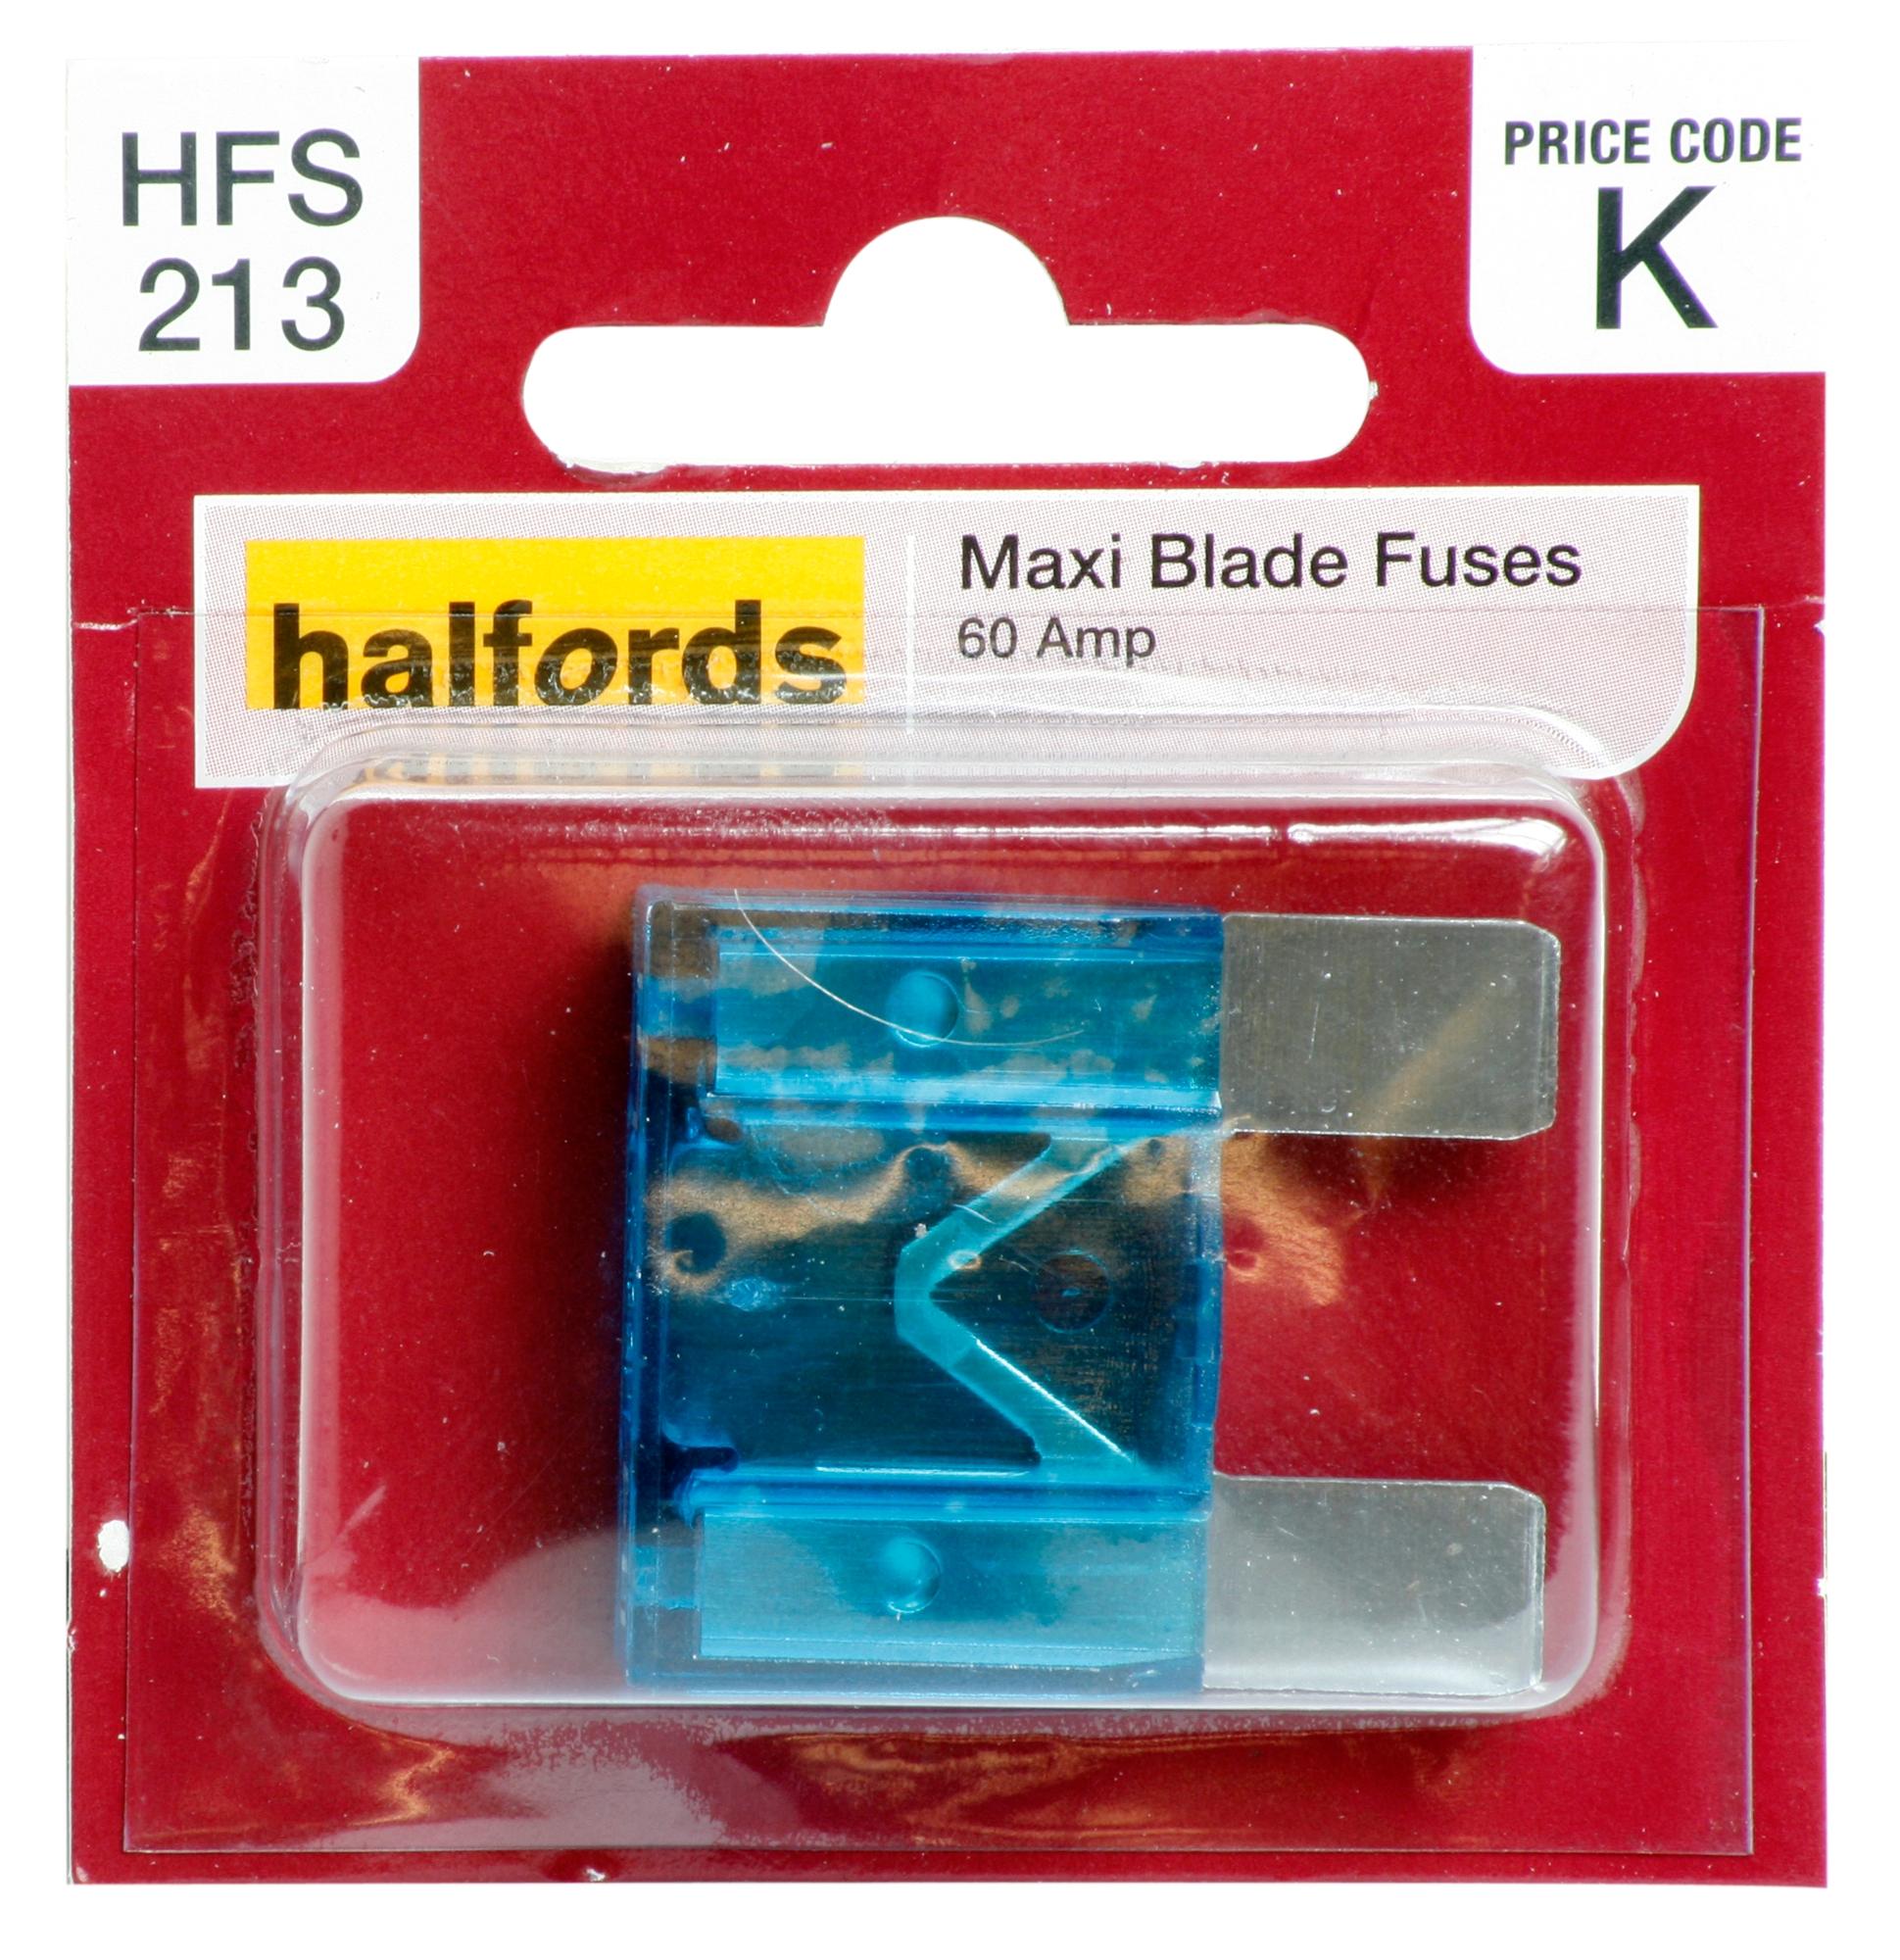 Halfords Maxi Blade Fuses 60 Amp (Hfs213)